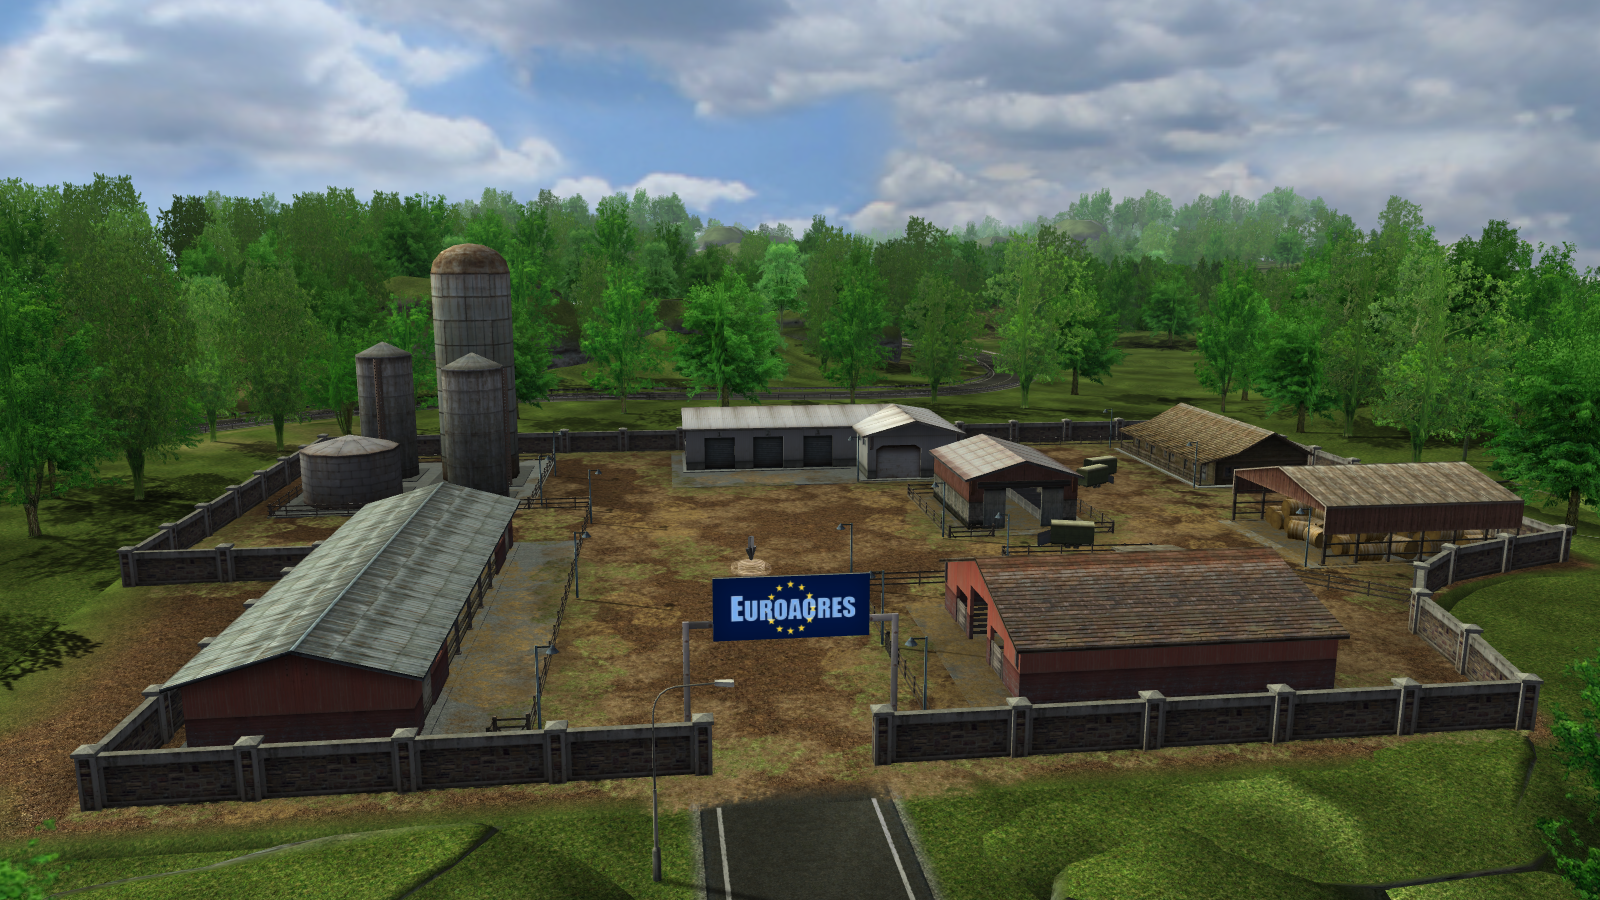 Farming Simulator 17, Farming Simulator Wiki